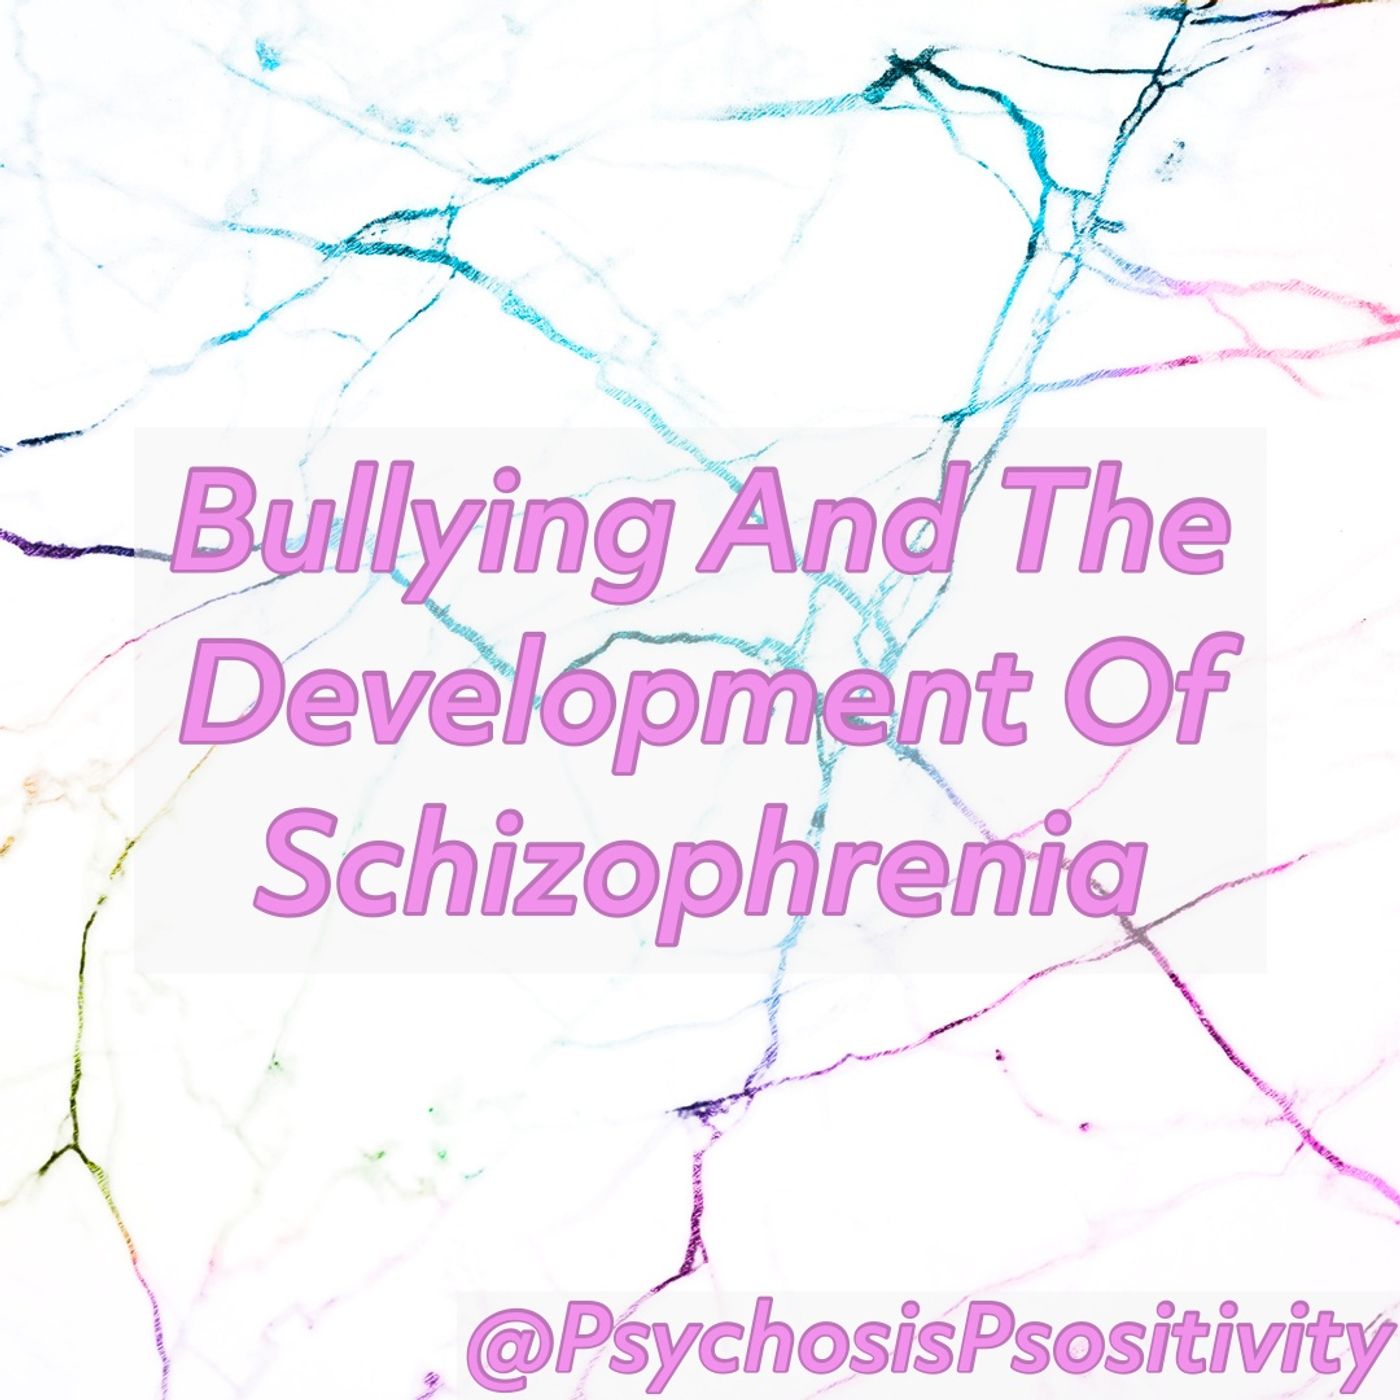 Bullying And The Development Of Schizophrenia